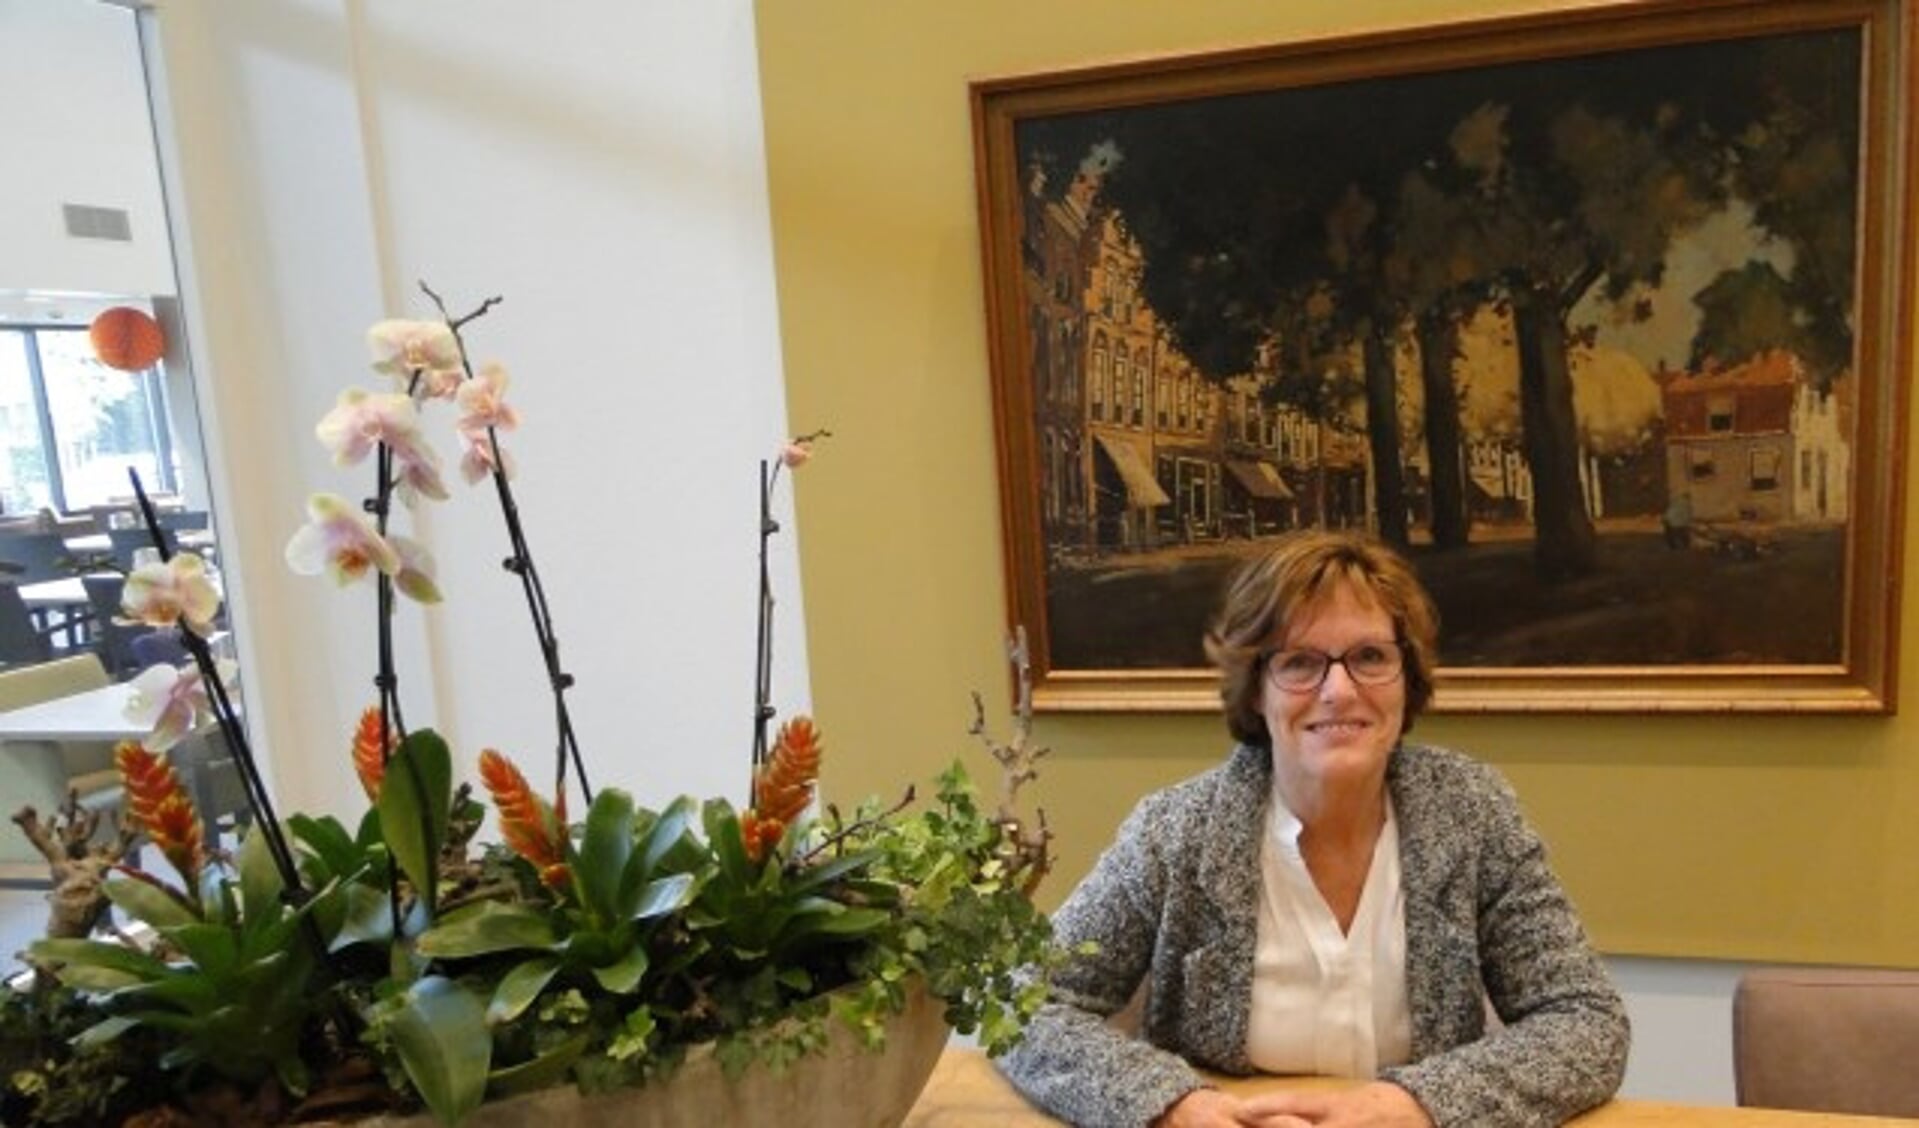 Joyce Jacobs is de nieuwe bestuurder in de Wulverhorst. (Tekst en foto: Margreet Nagtegaal)